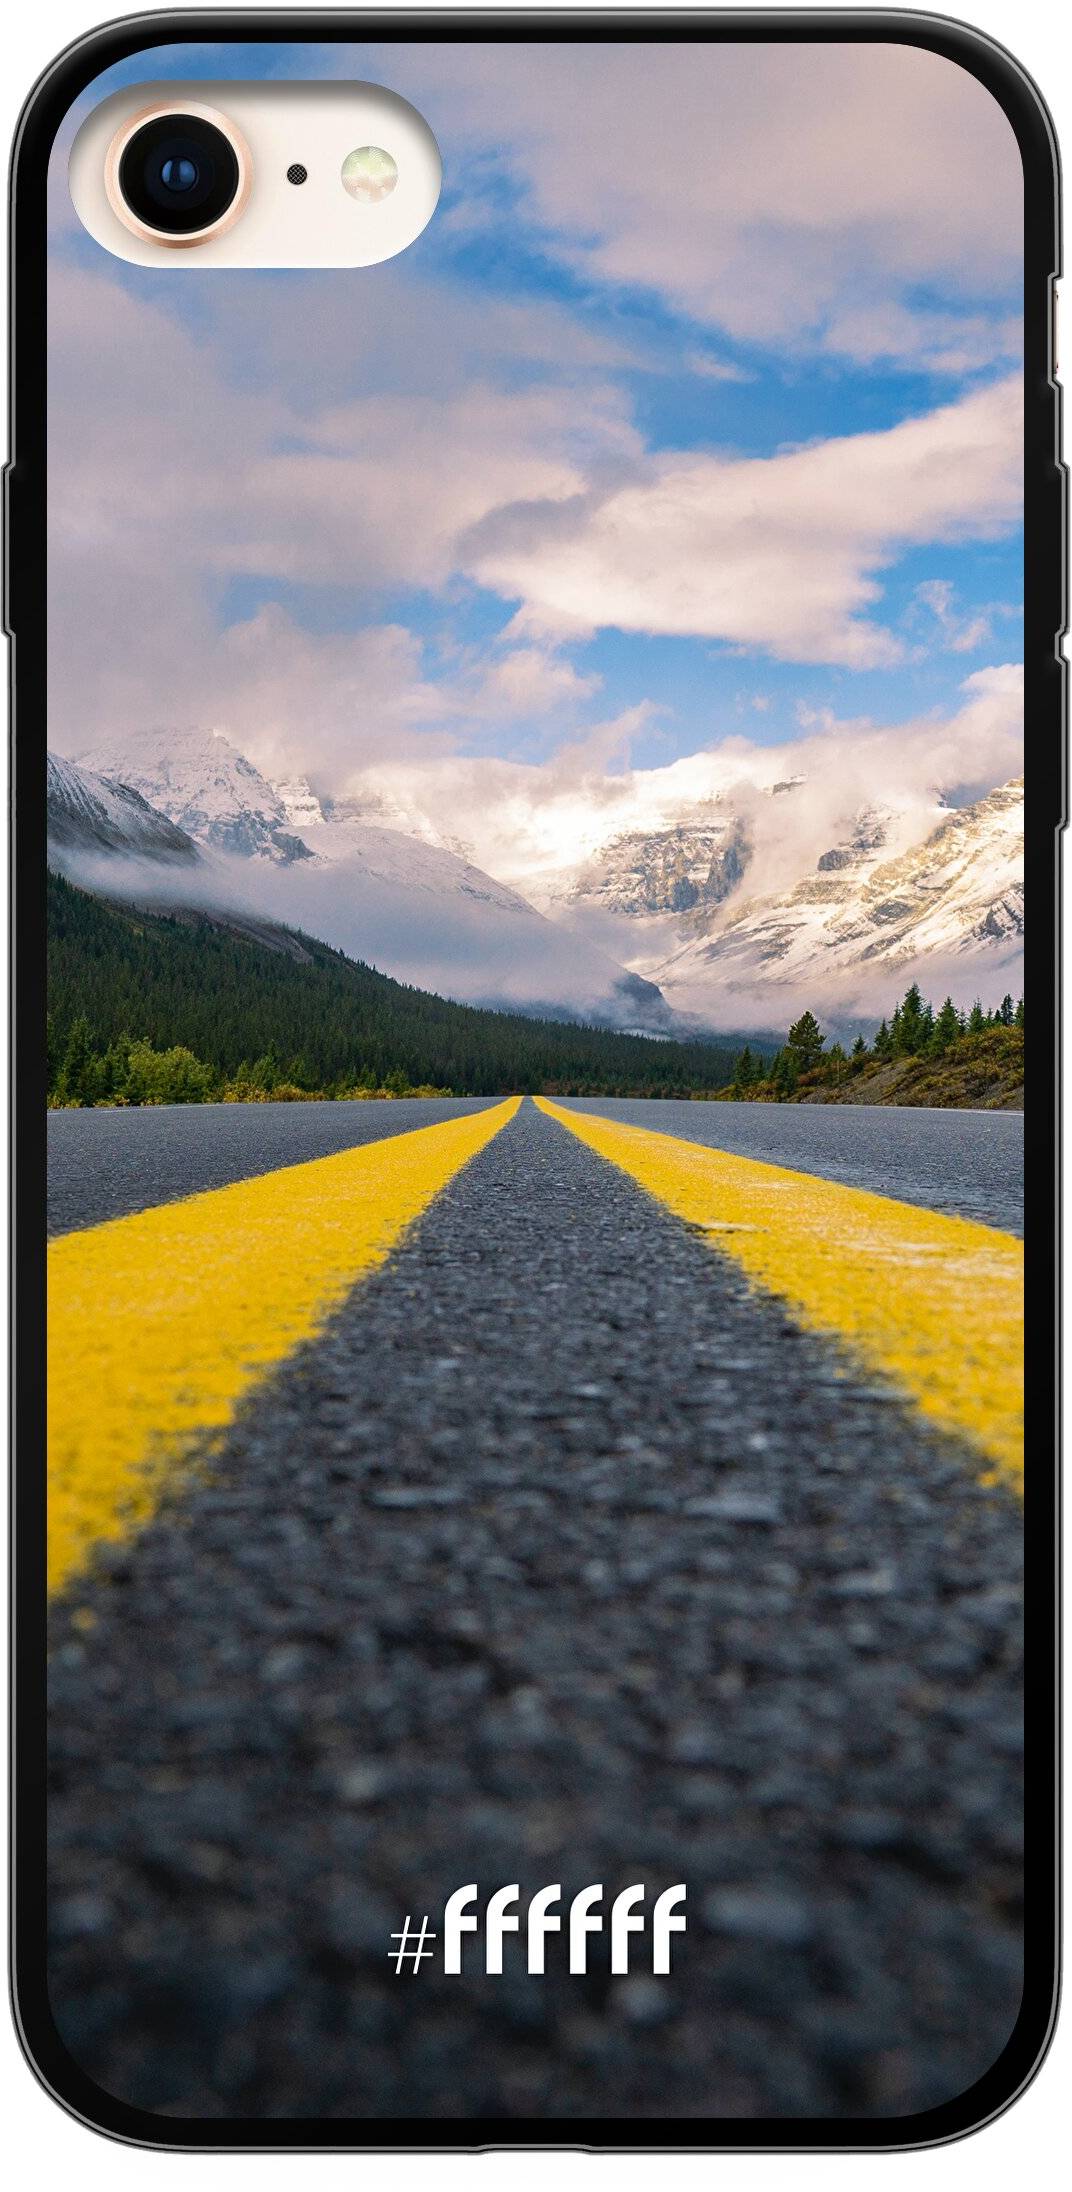 Road Ahead iPhone 7